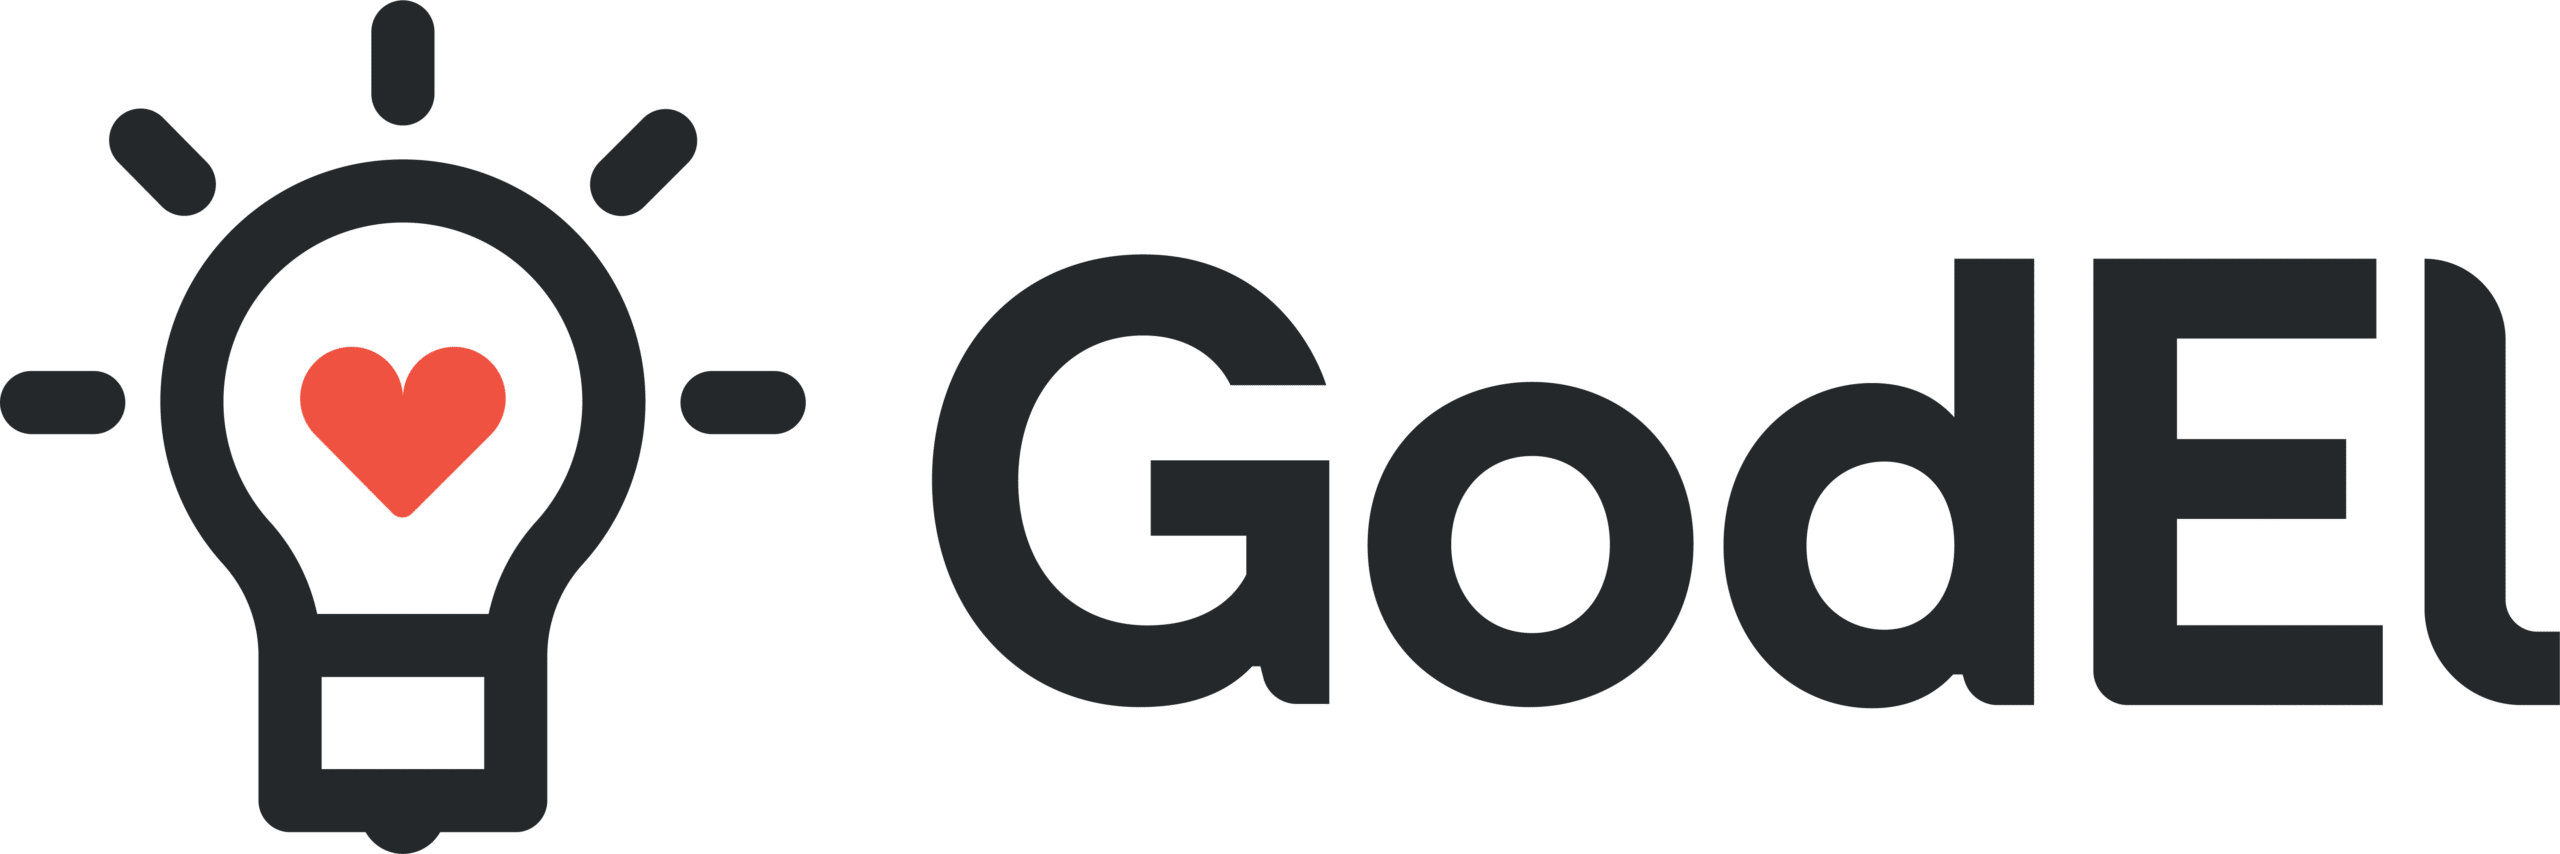 GodEl_logo_gra_liggande